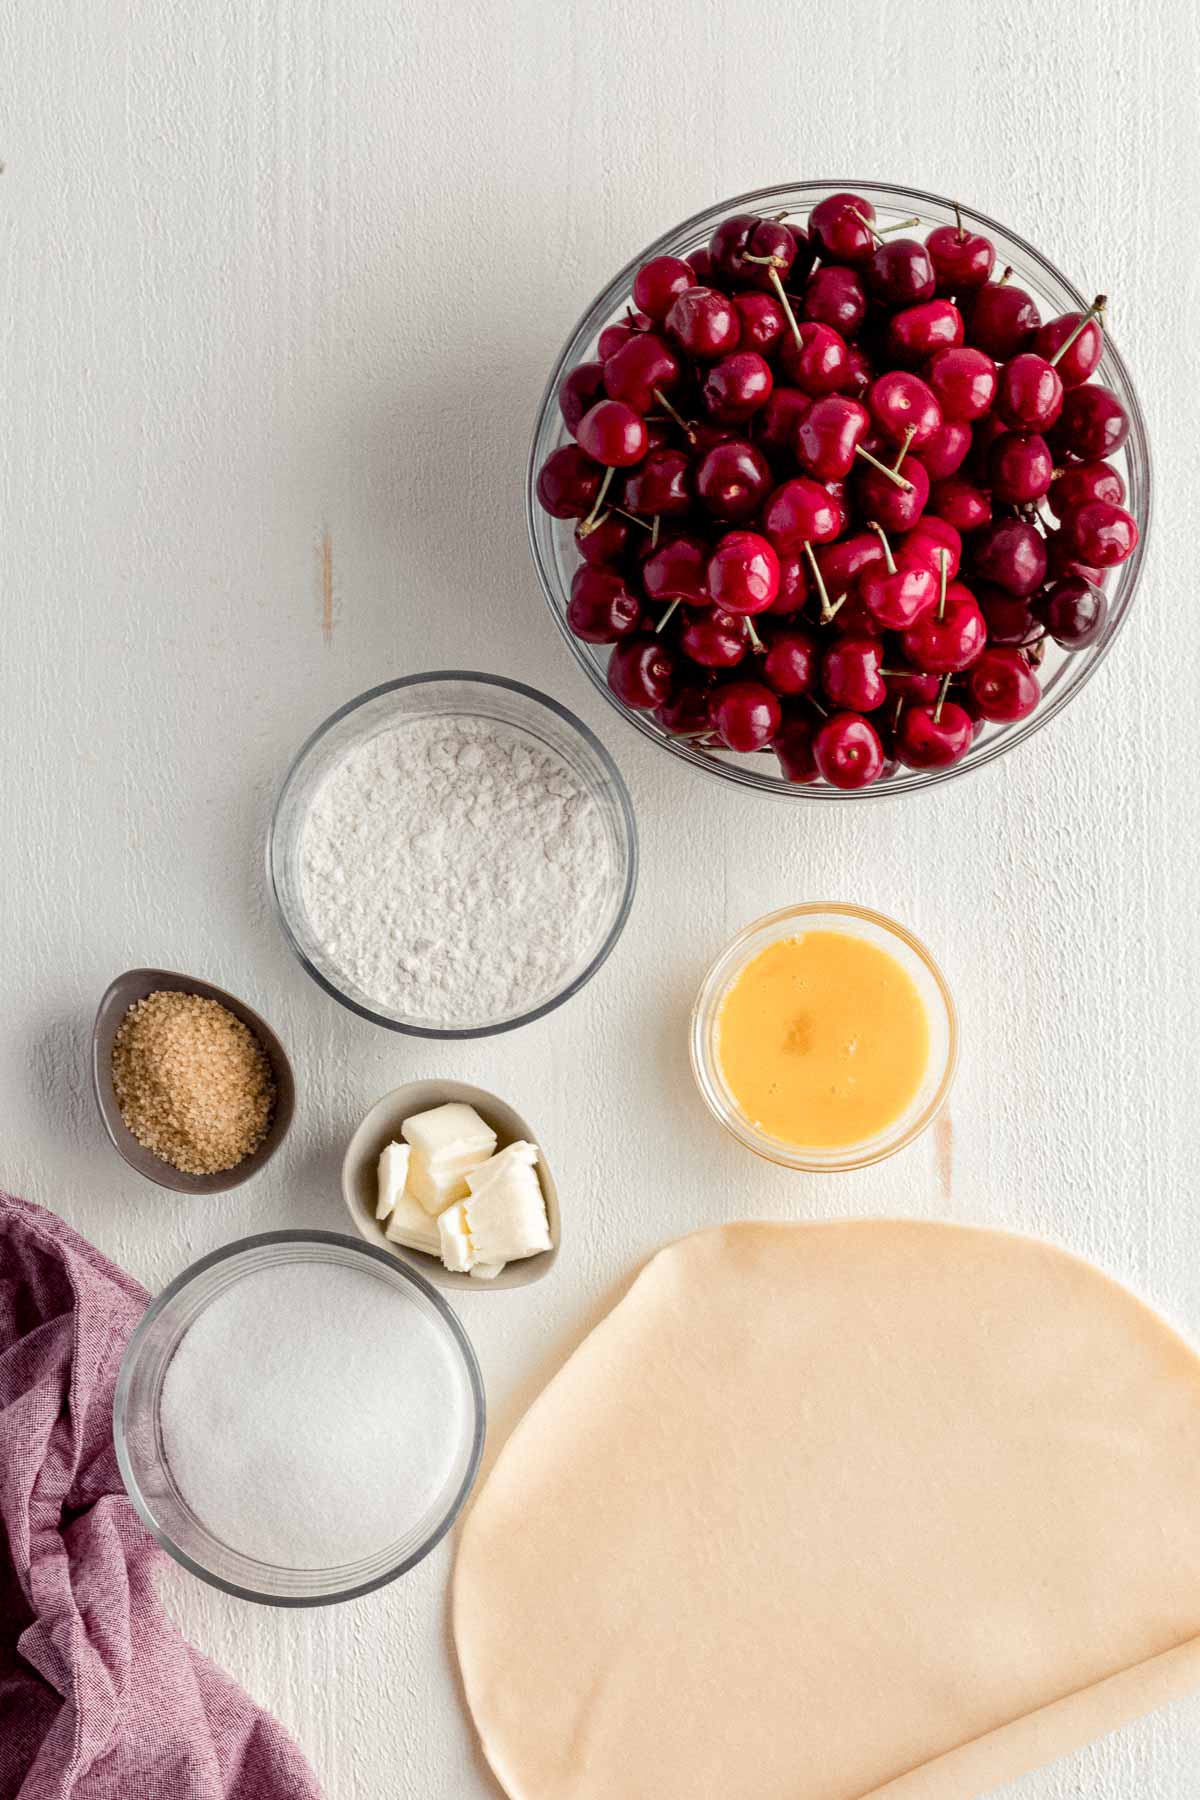 Cherry Pie ingredients in prep bowls